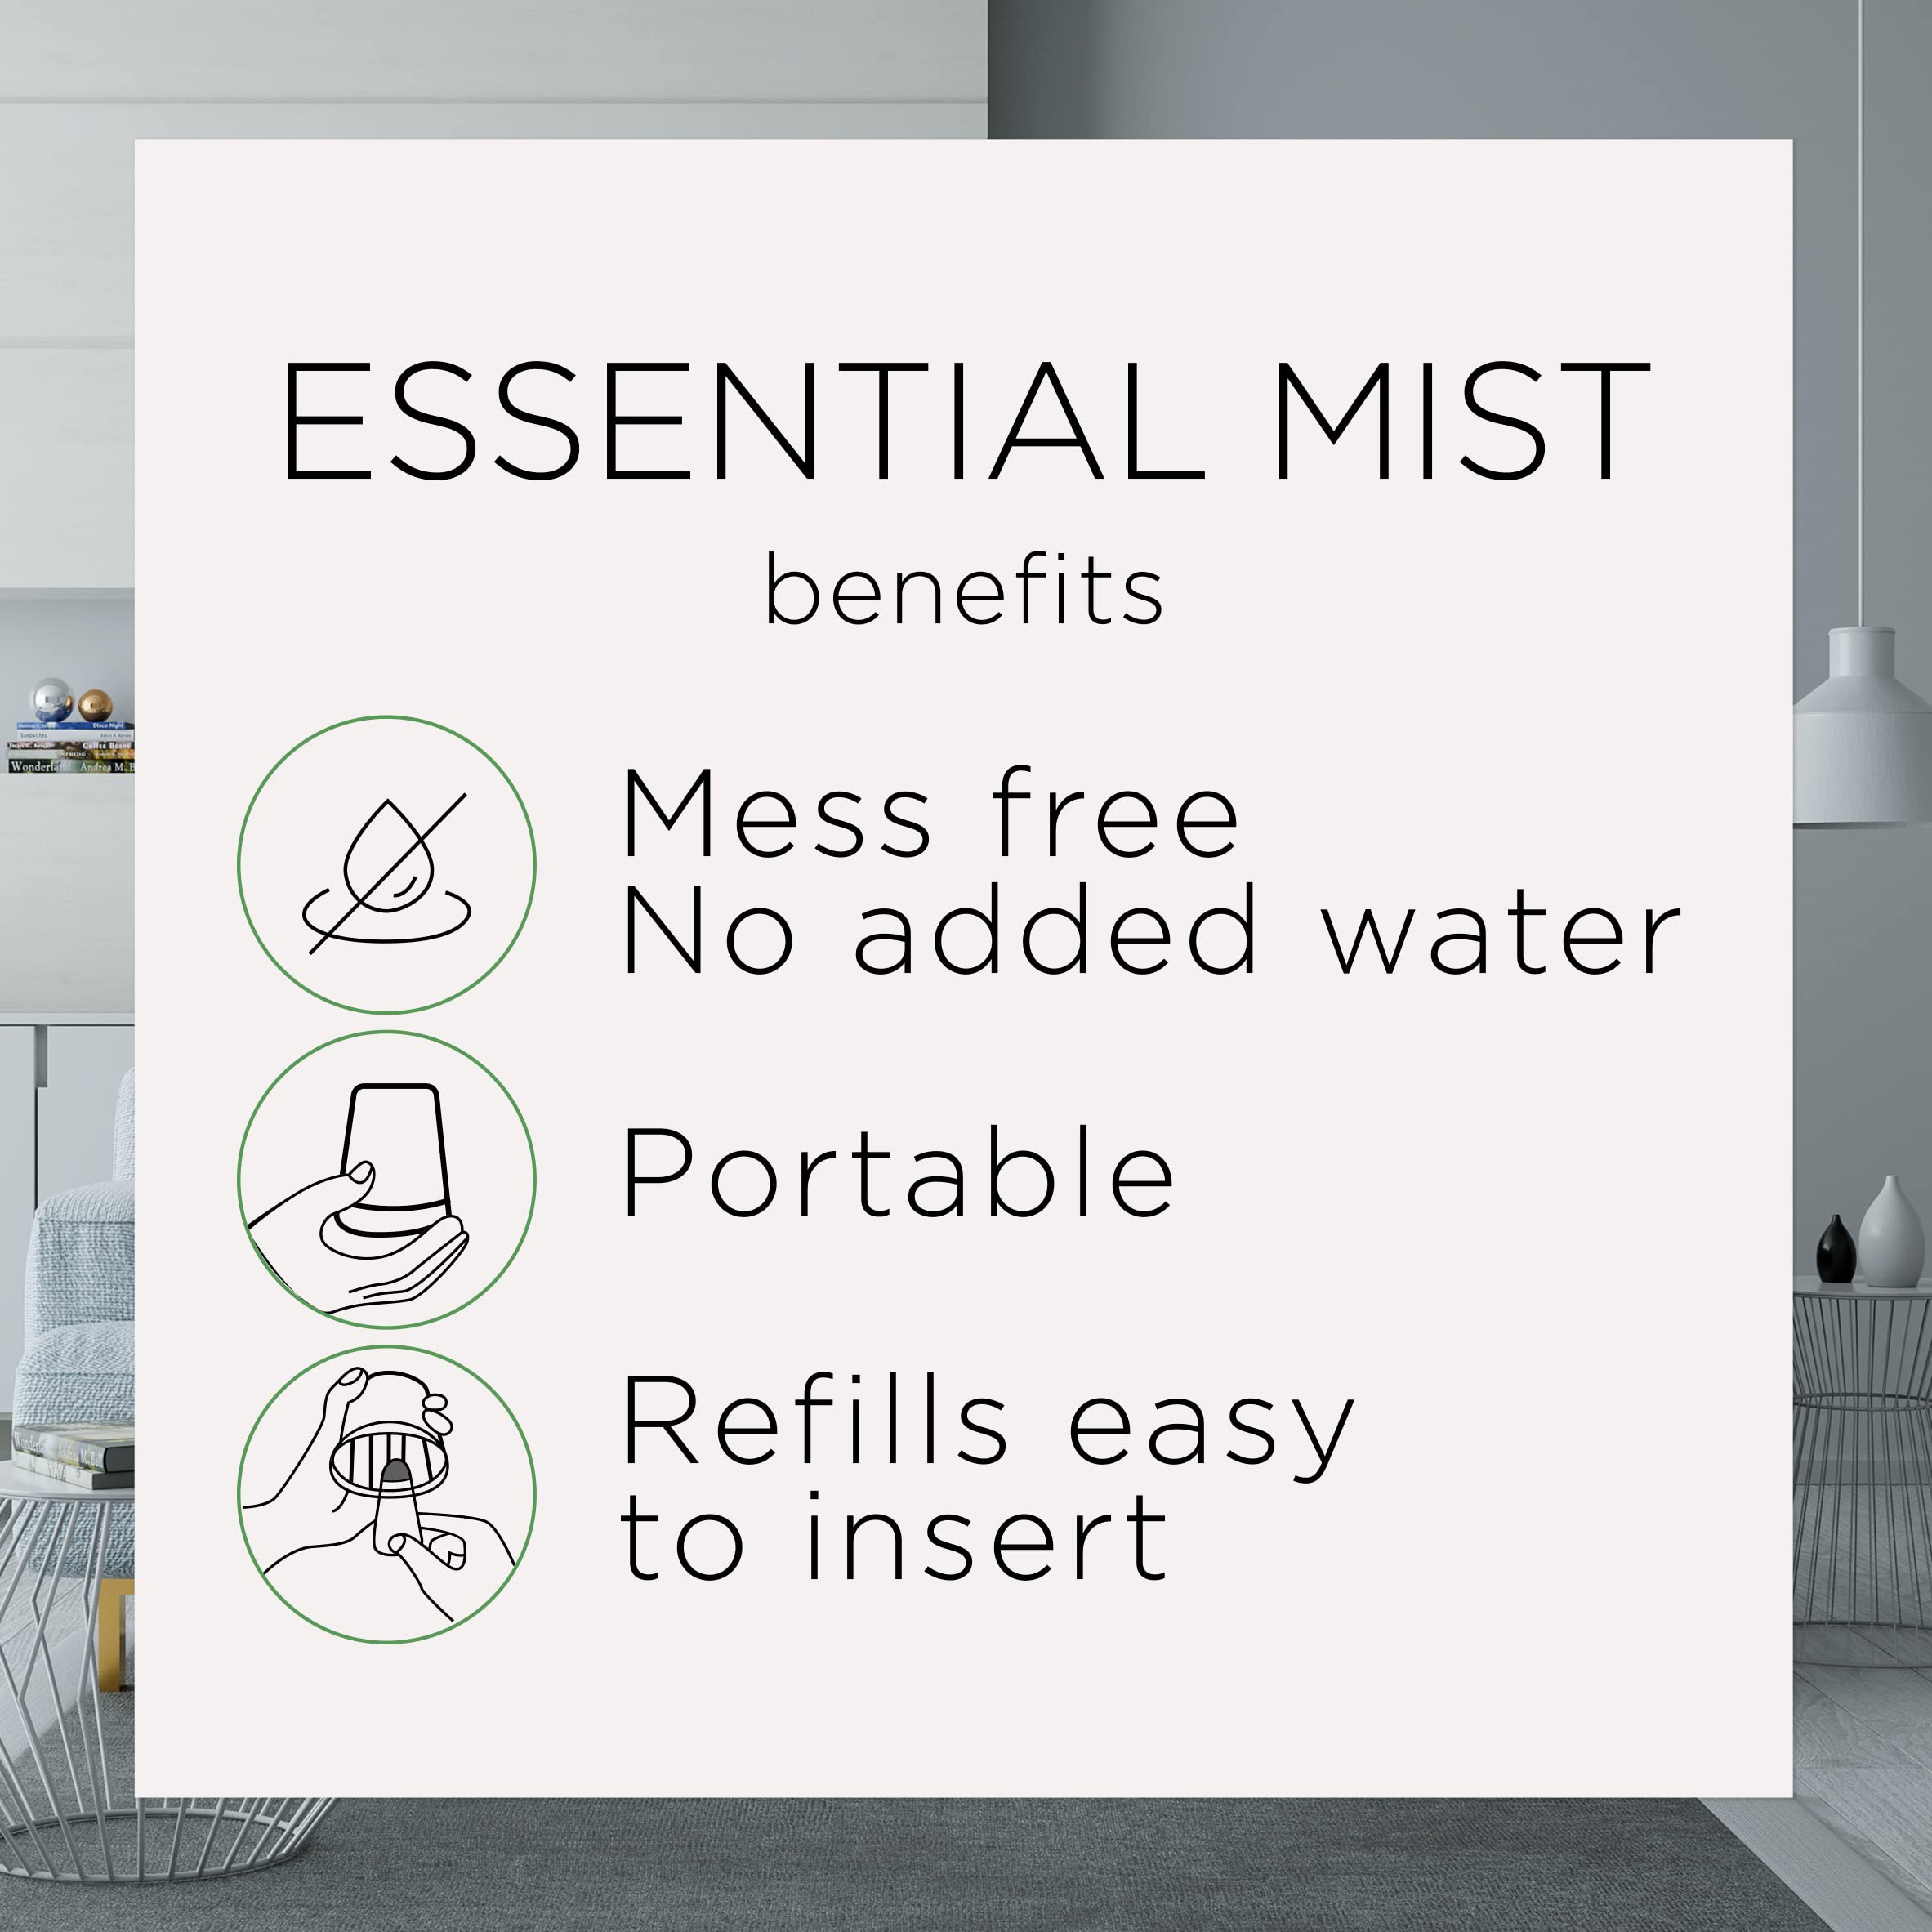 Air Wick Essential Mist Refill, 5 ct, Mandarin & Sweet Orange, Essential Oils Diffuser, Air Freshener